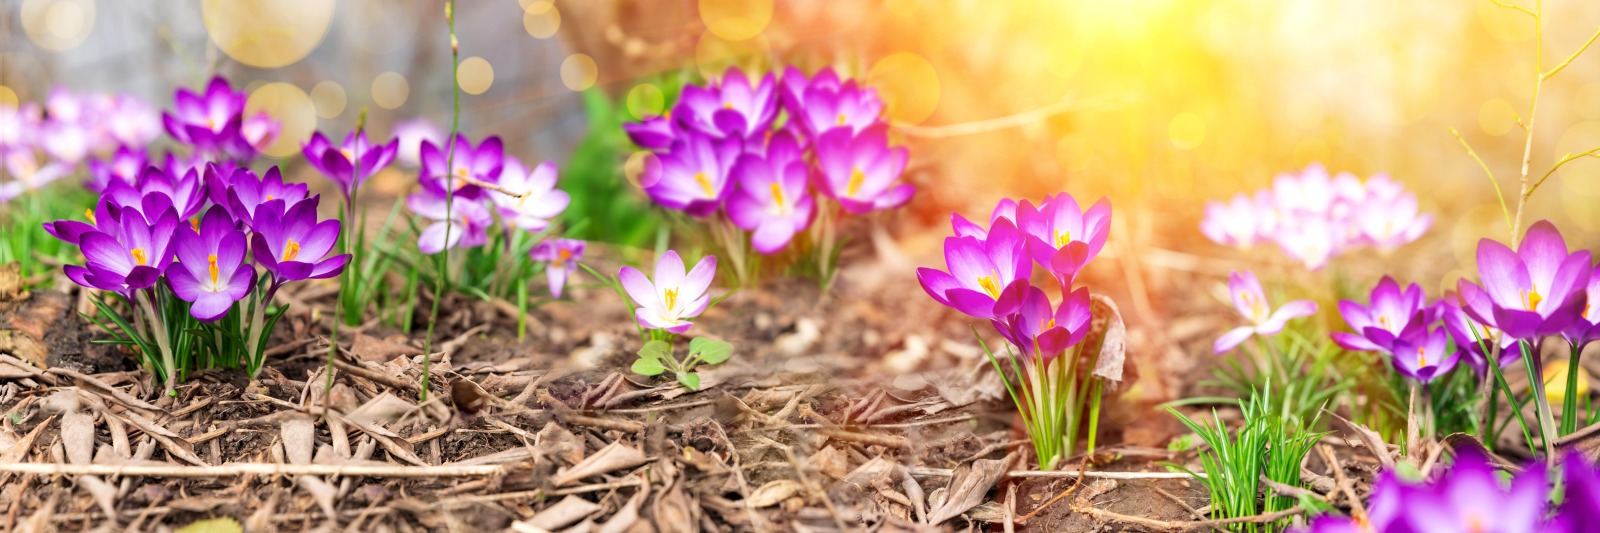 spring banner, purple crocus flowers